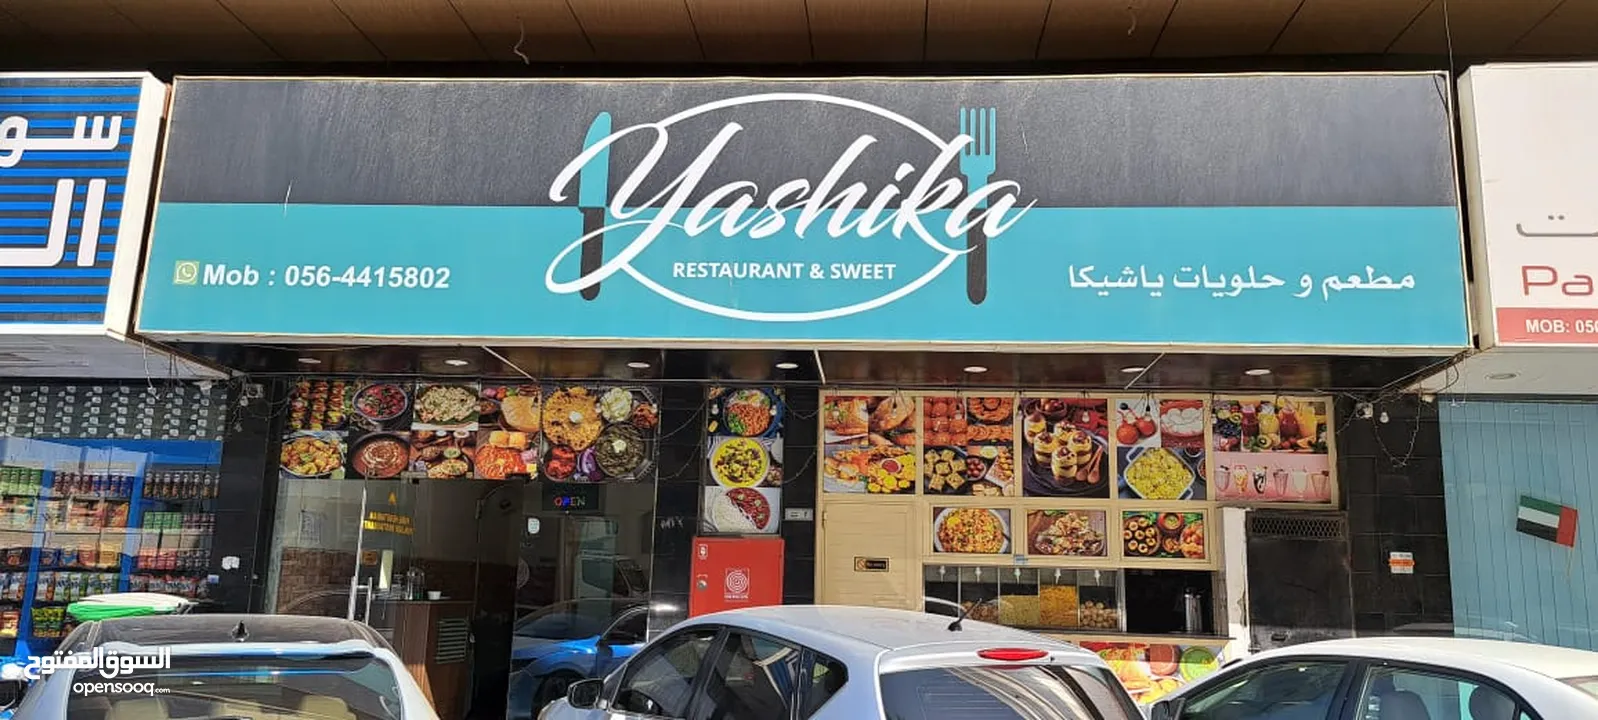 Yashika Restaurant and sweets llc